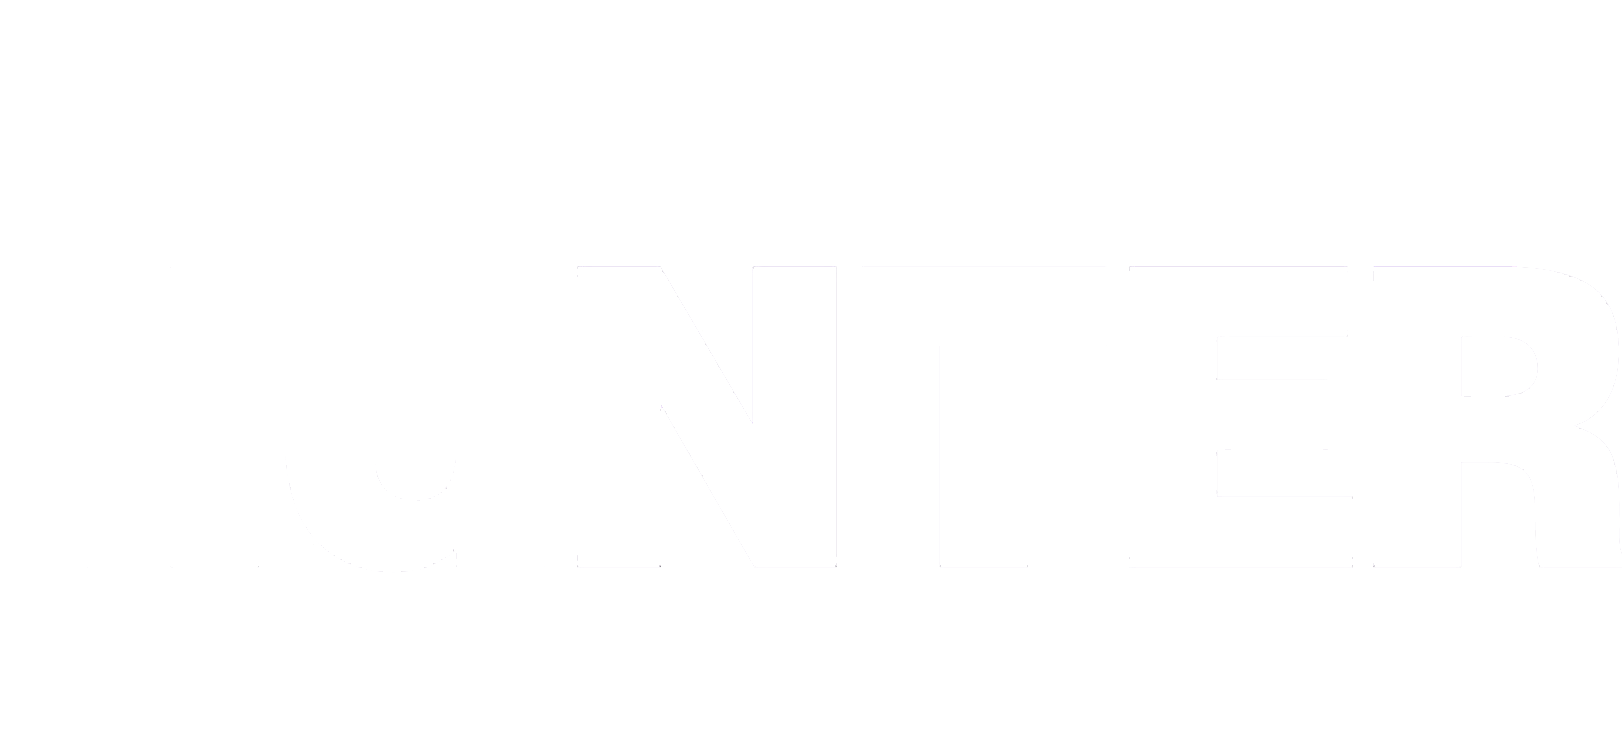 MANHATTAN HUNTER SCIENCE HIGH SCHOOL